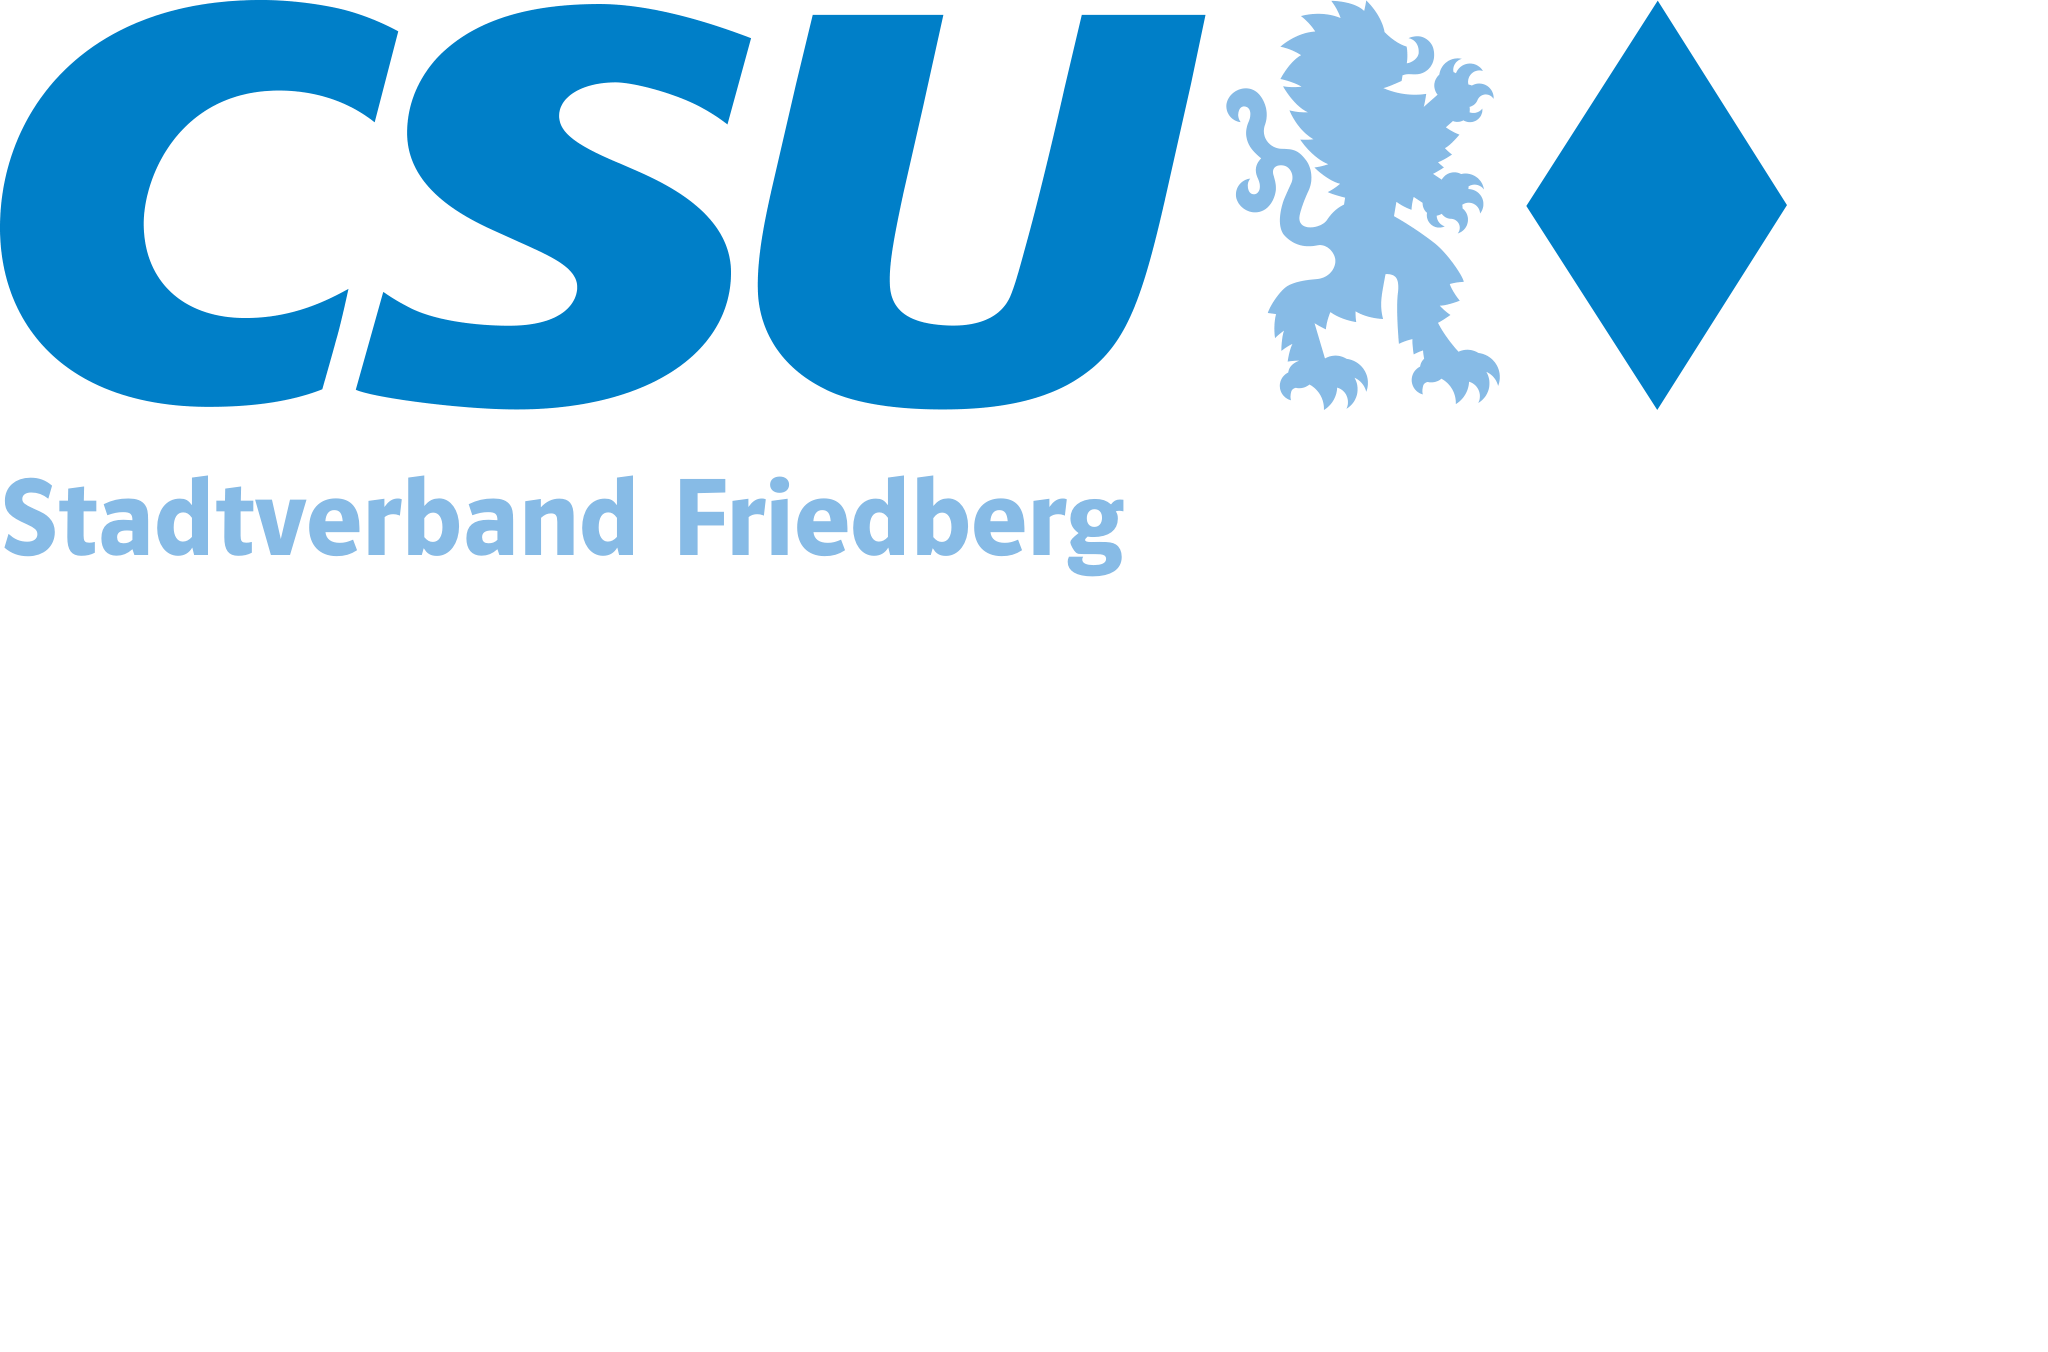 csu-friedberg